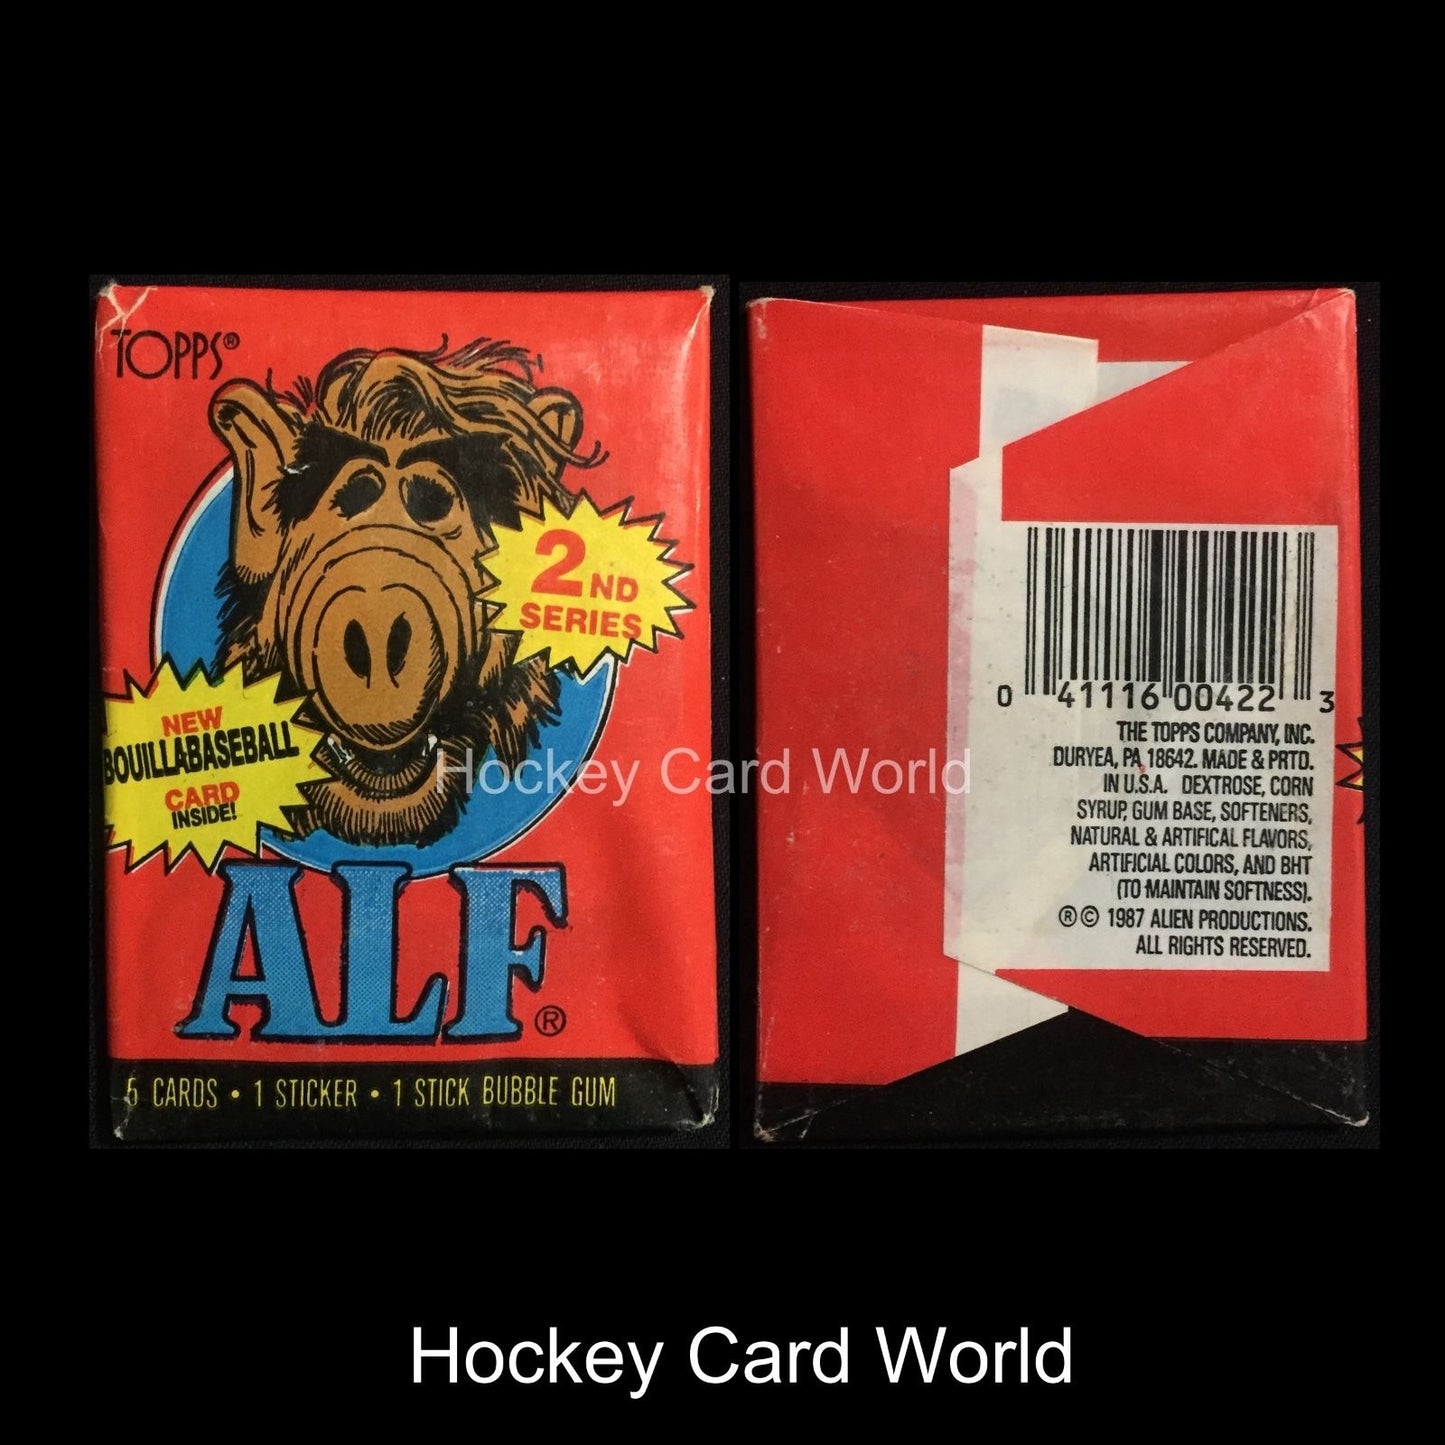  1987 Topps ALF Series 2 Hobby Pack - 5 Trading Cards + 1 Sticker + Gum Image 1